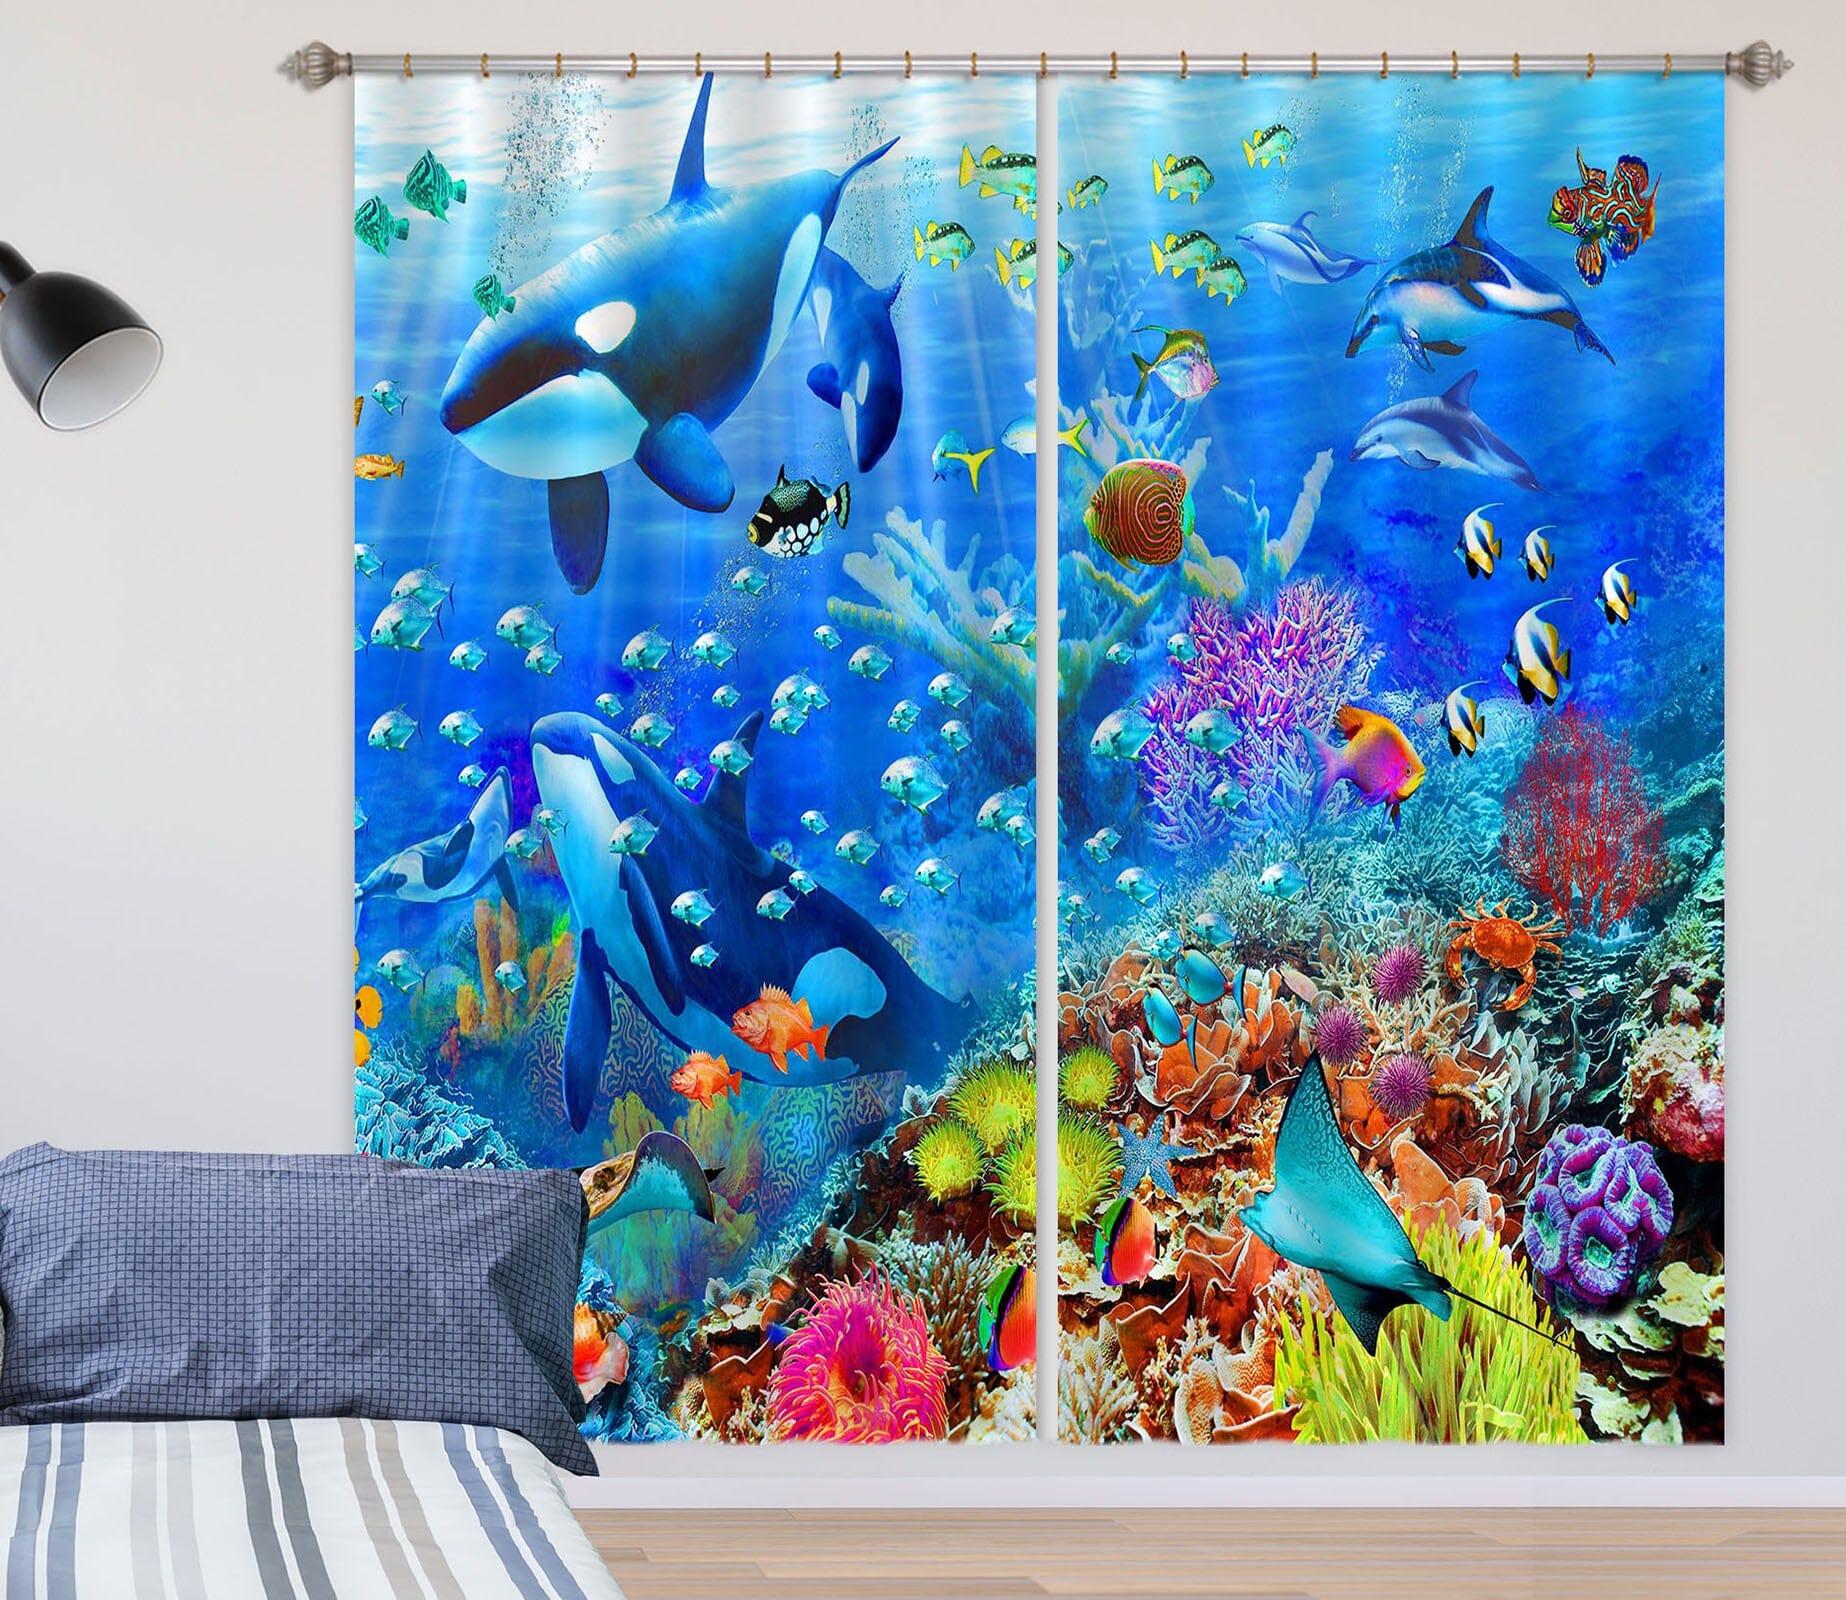 3D The Underwater World 051 Adrian Chesterman Curtain Curtains Drapes Curtains AJ Creativity Home 